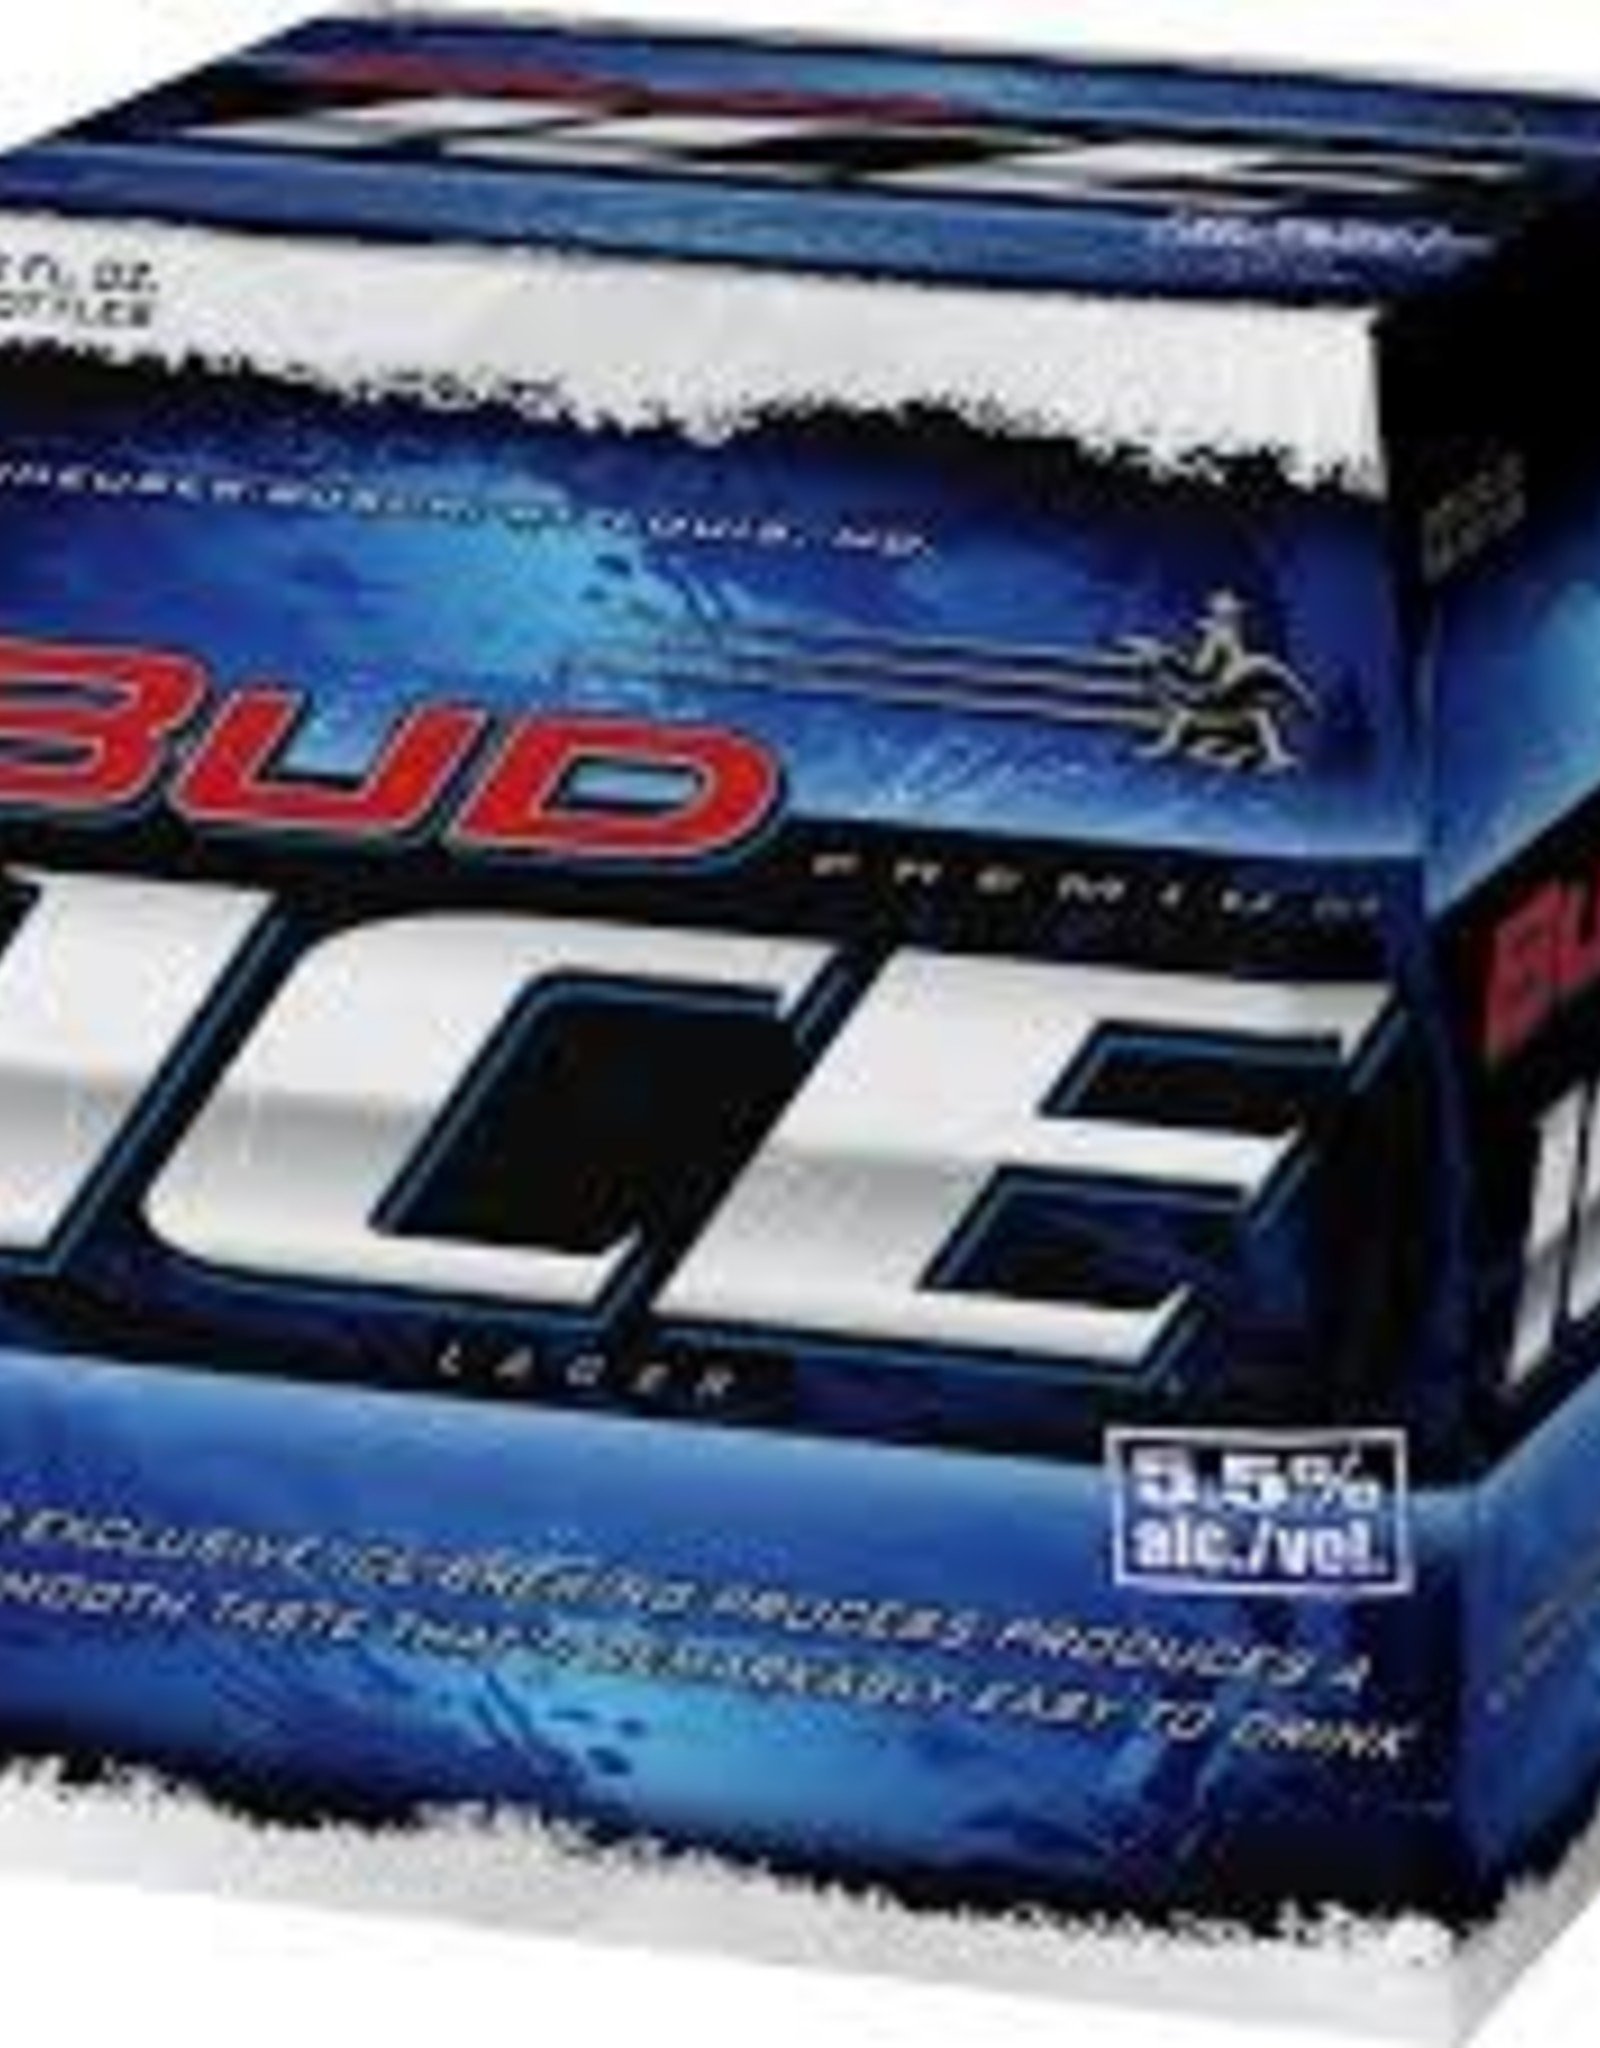 Budweiser Bud Ice